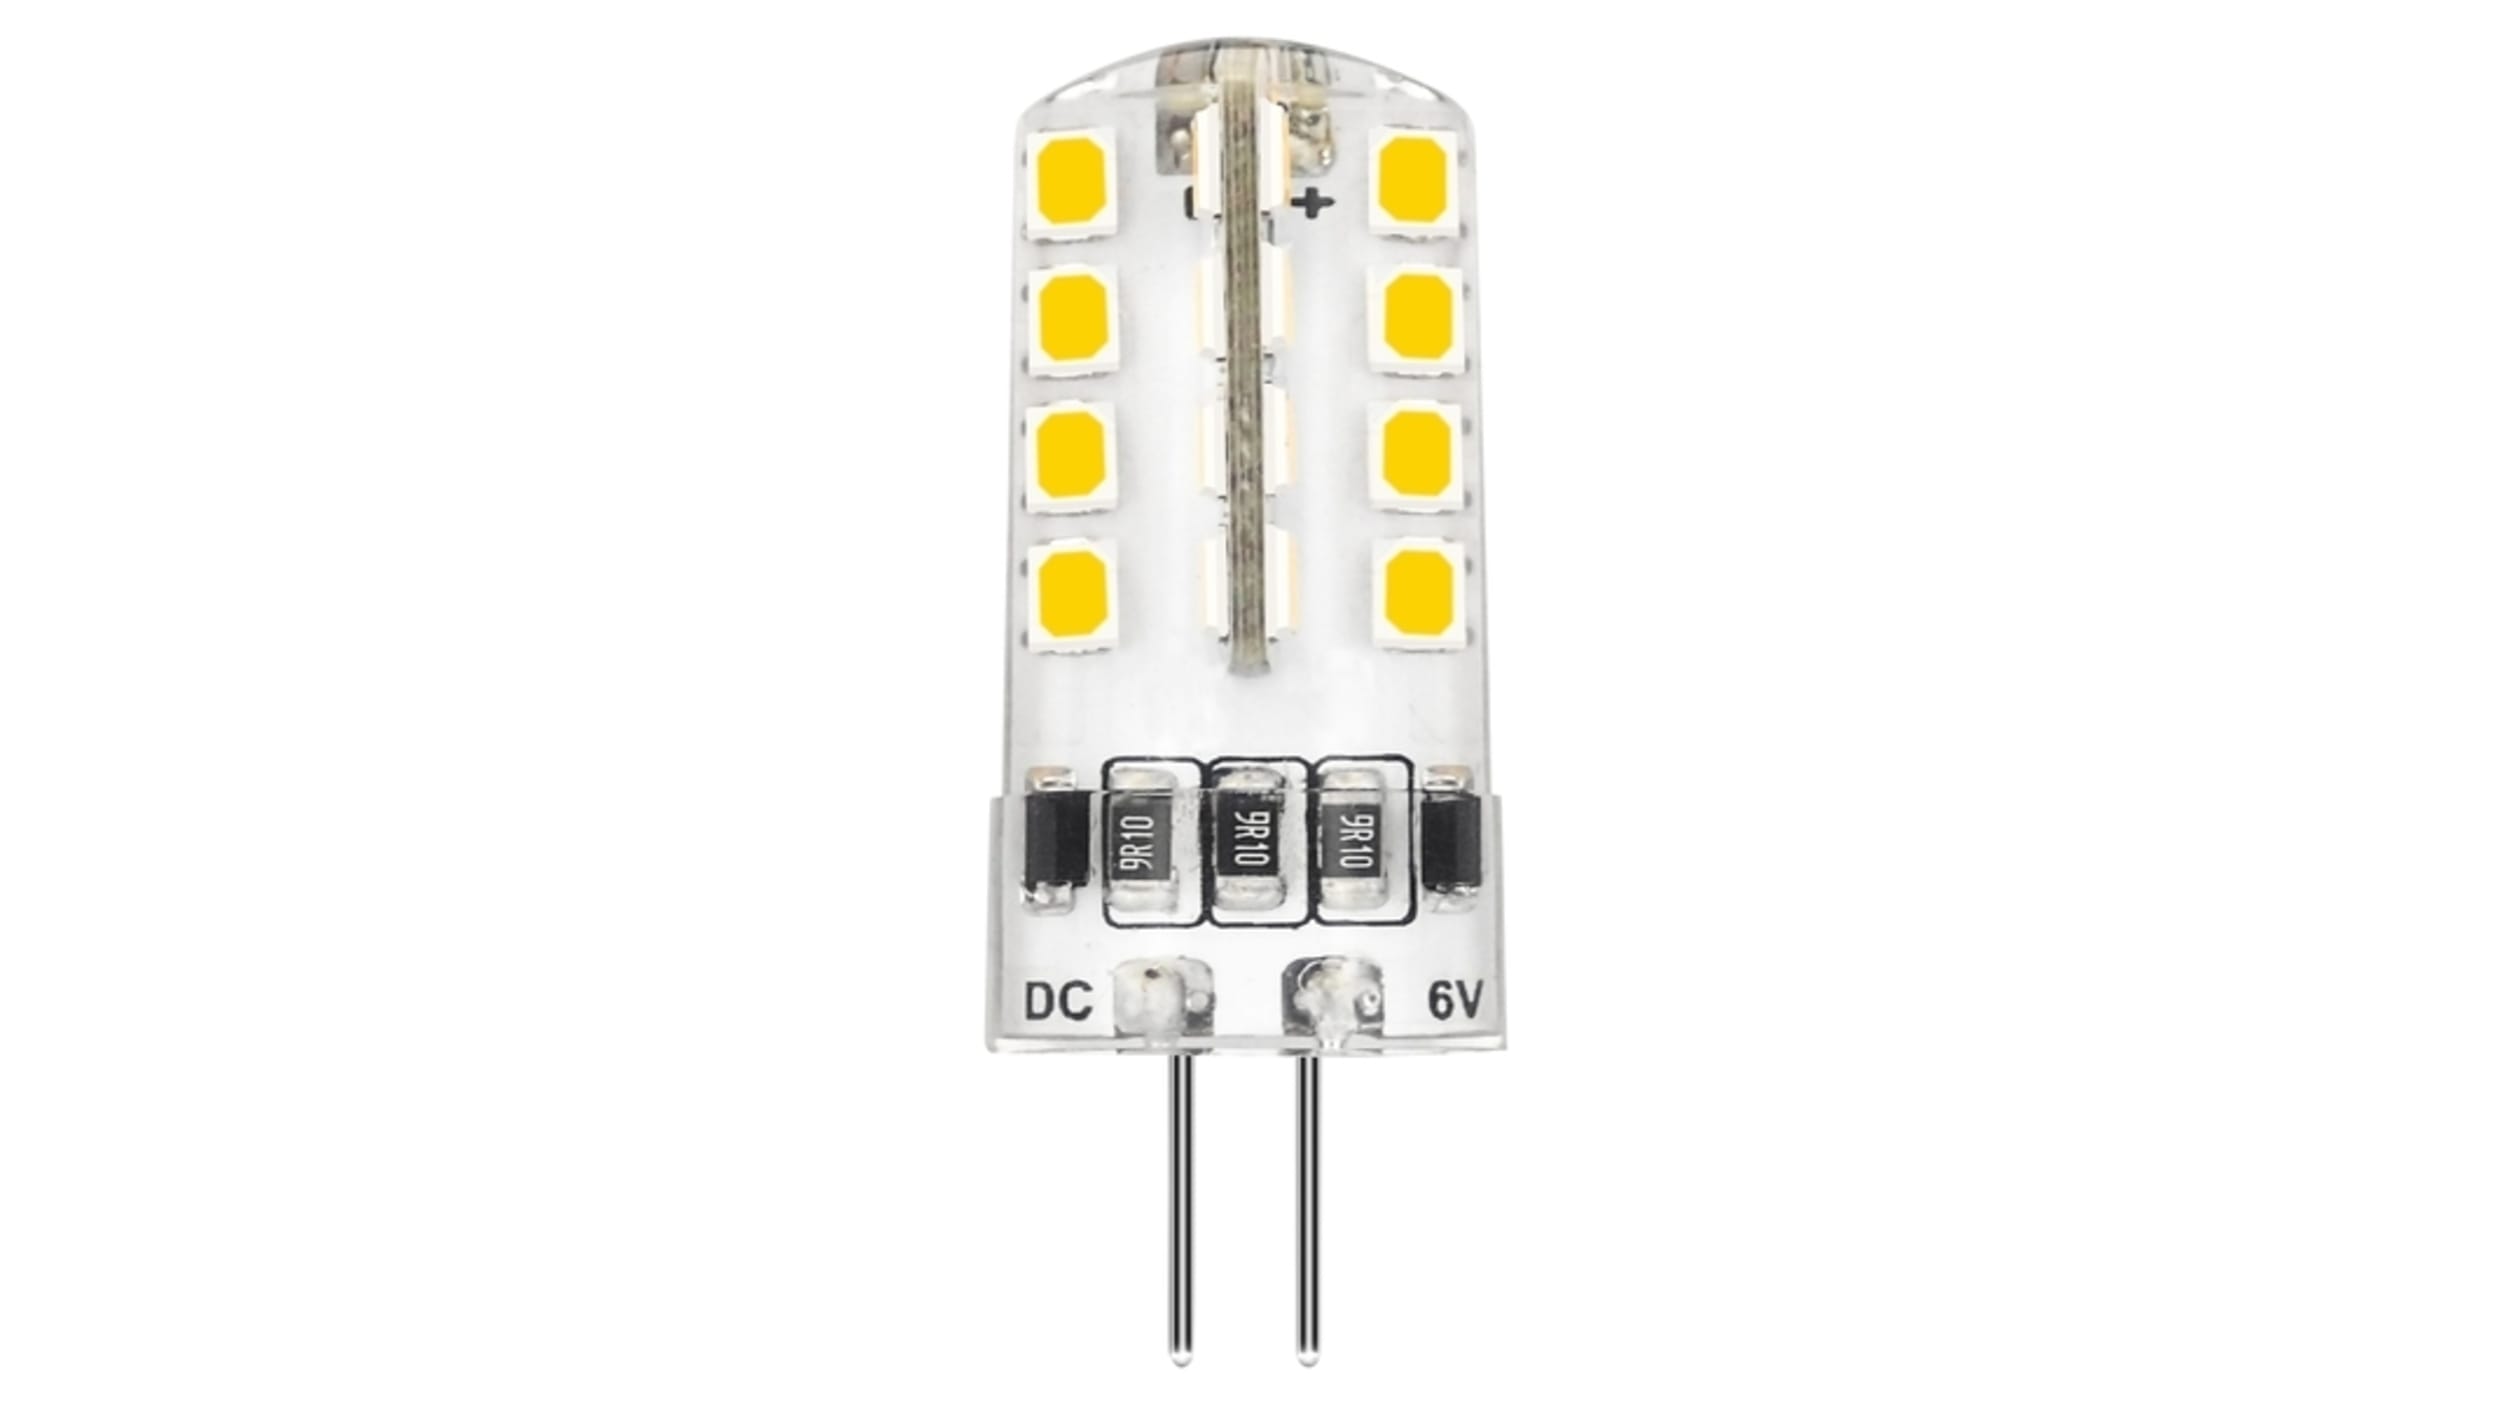 LED Lampe - Aigi - G4 Sockel - 3W - Tageslicht 6500K, Ersetzt 25W